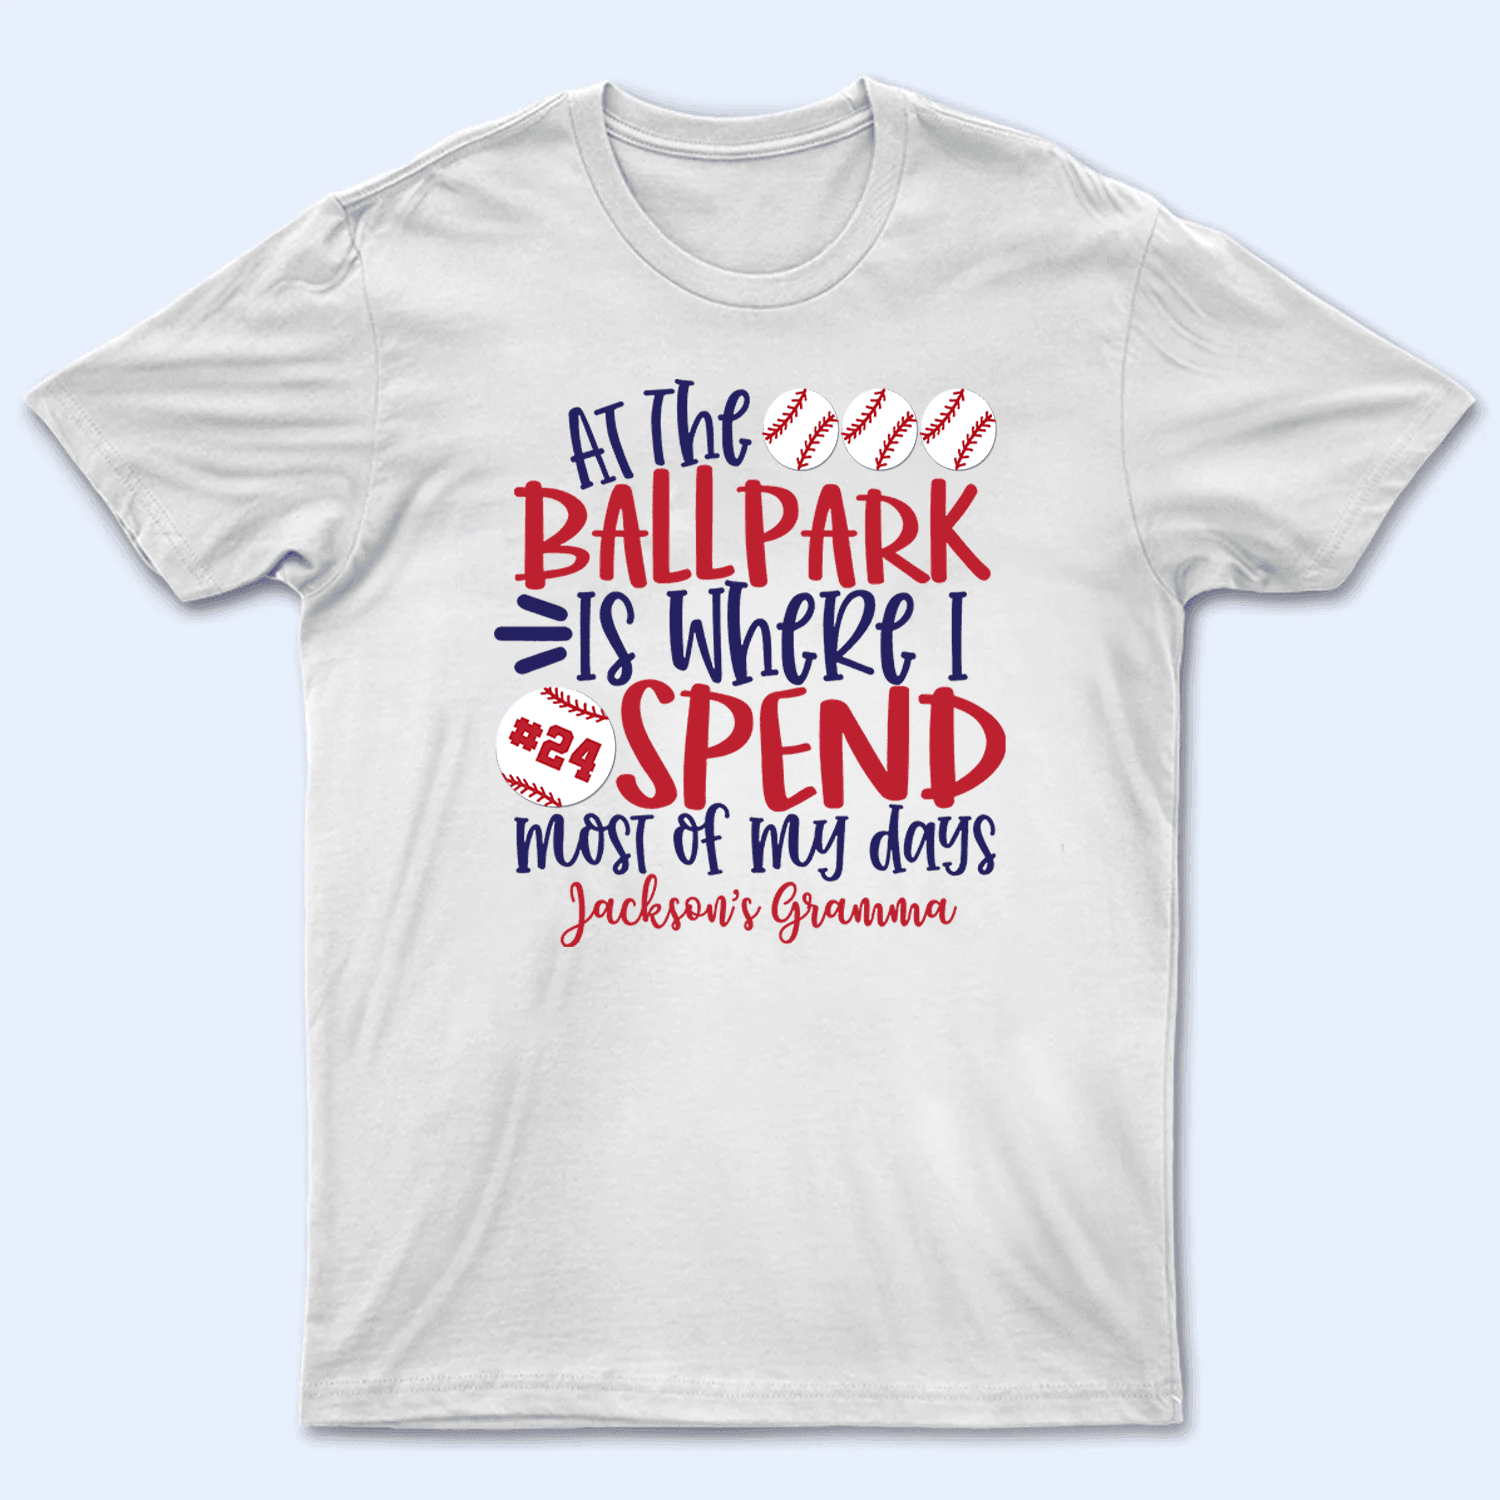 At The Ballpark Is Where I Spend My Days - Baseball/Softball - Personalized Custom T Shirt - Gift for Grandma/Nana/Mimi, Mom, Wife, Grandparent - Suzitee Store